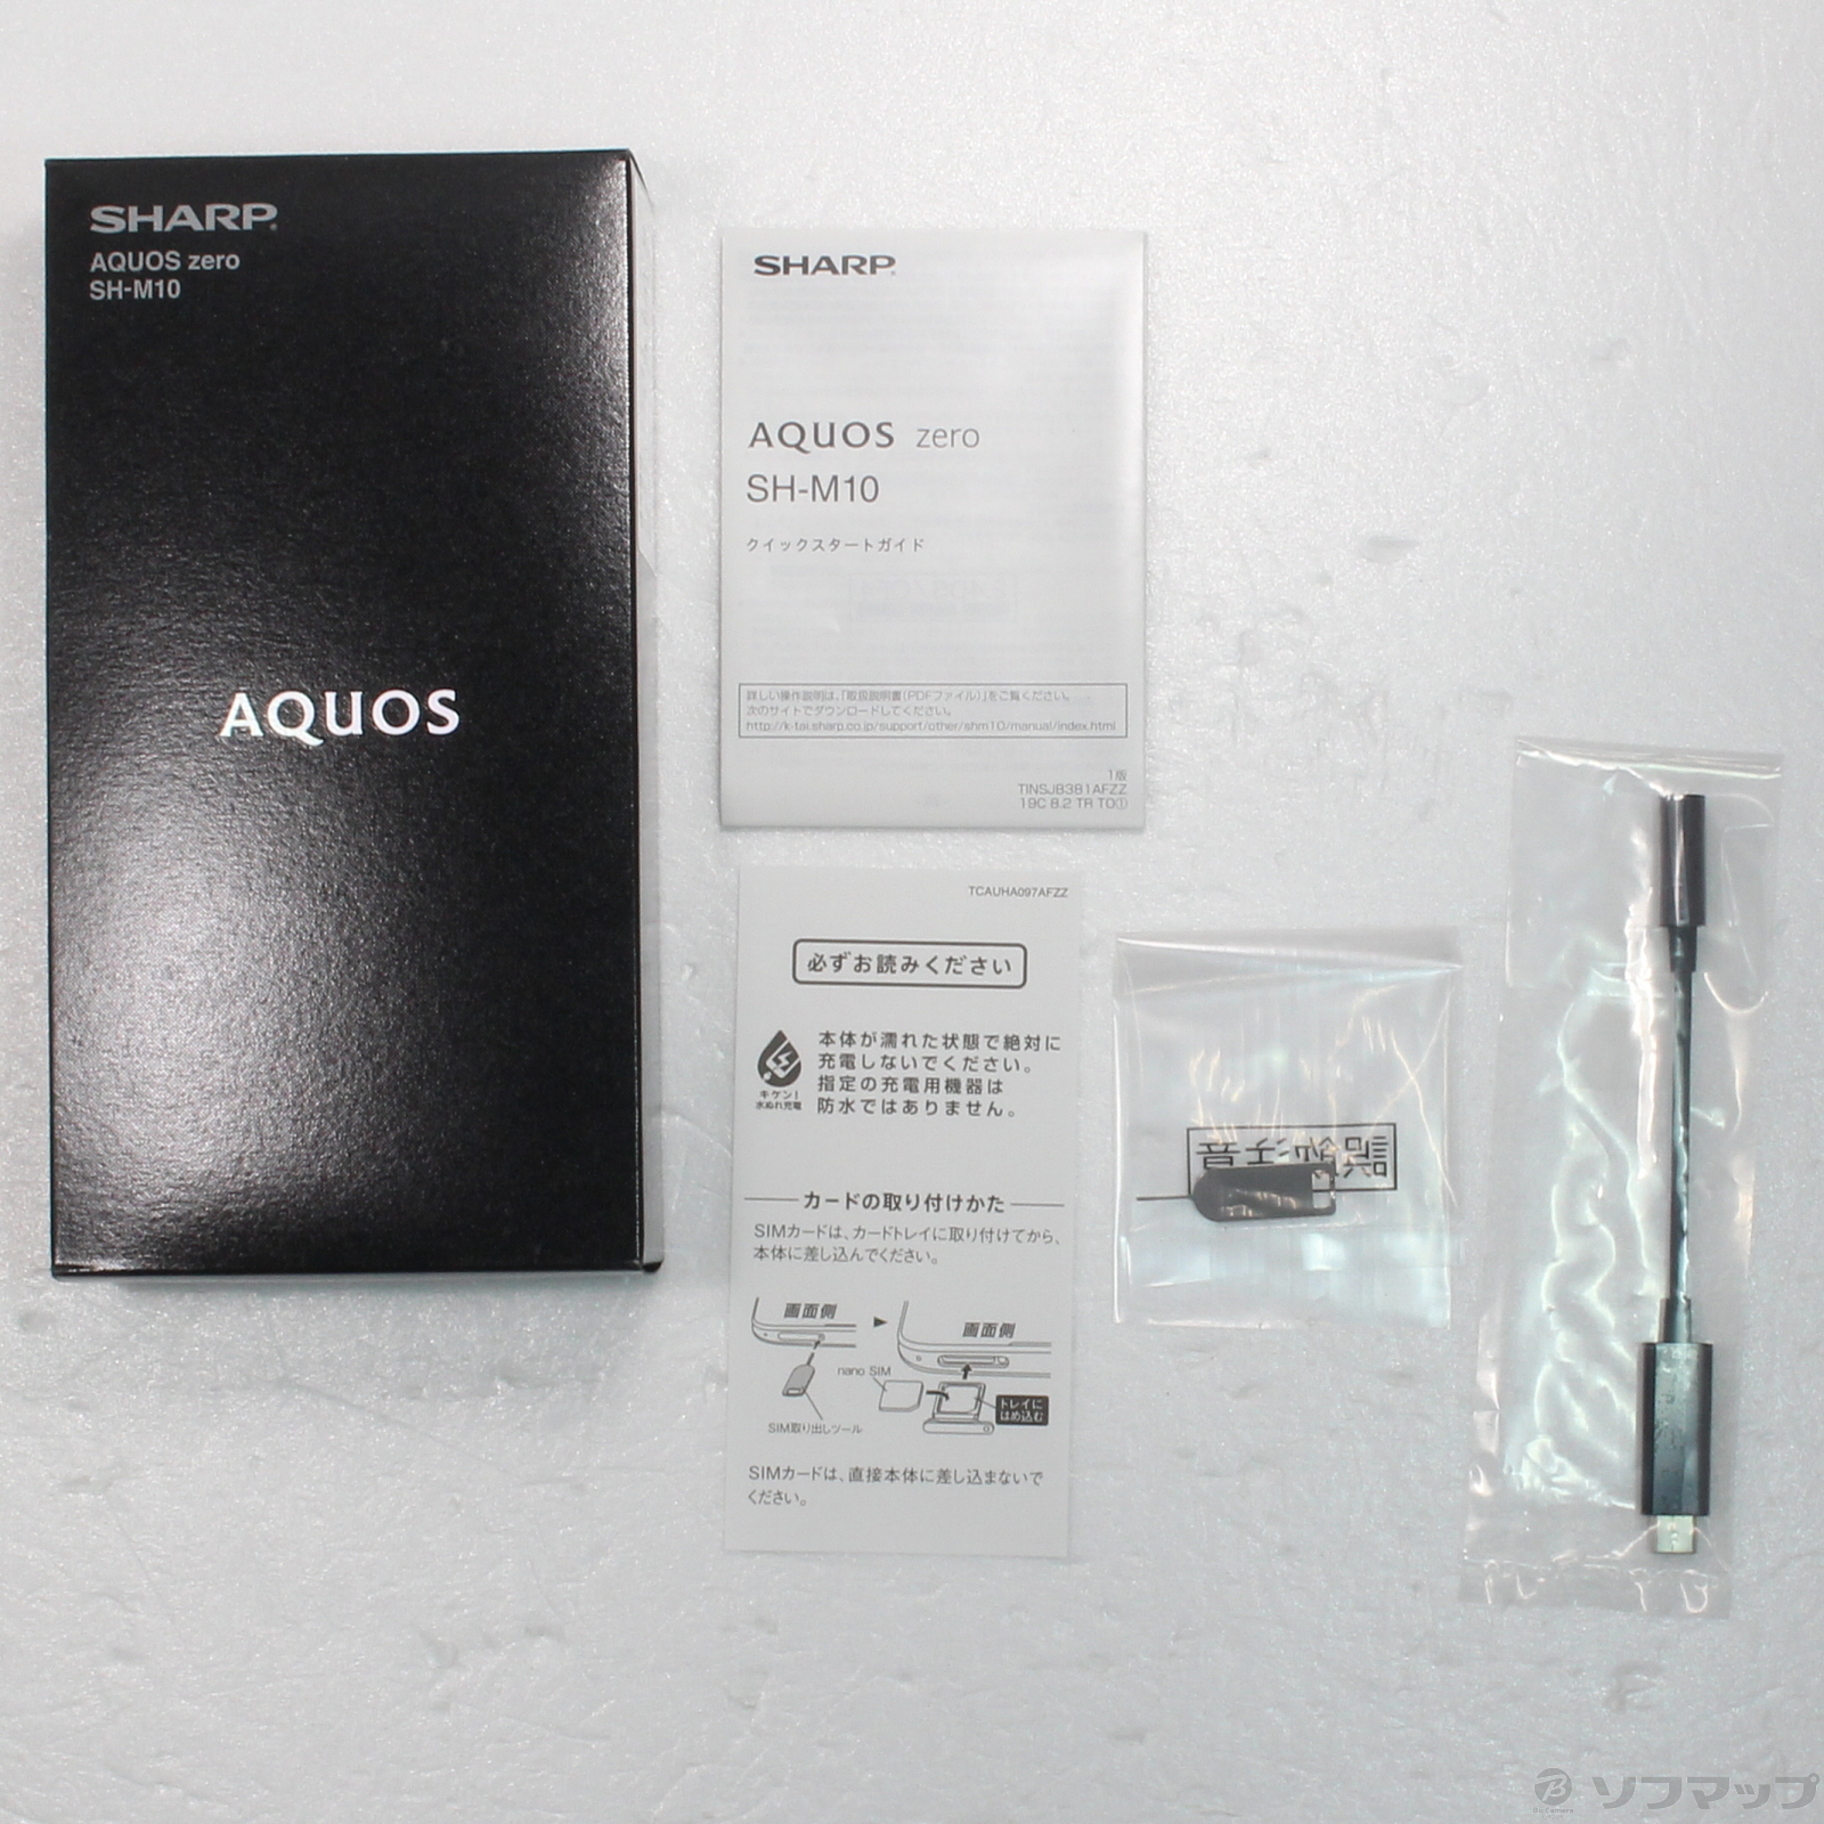 AQUOS zero 楽天版 128GB アドバンスブラック SH-M10 SIMフリー